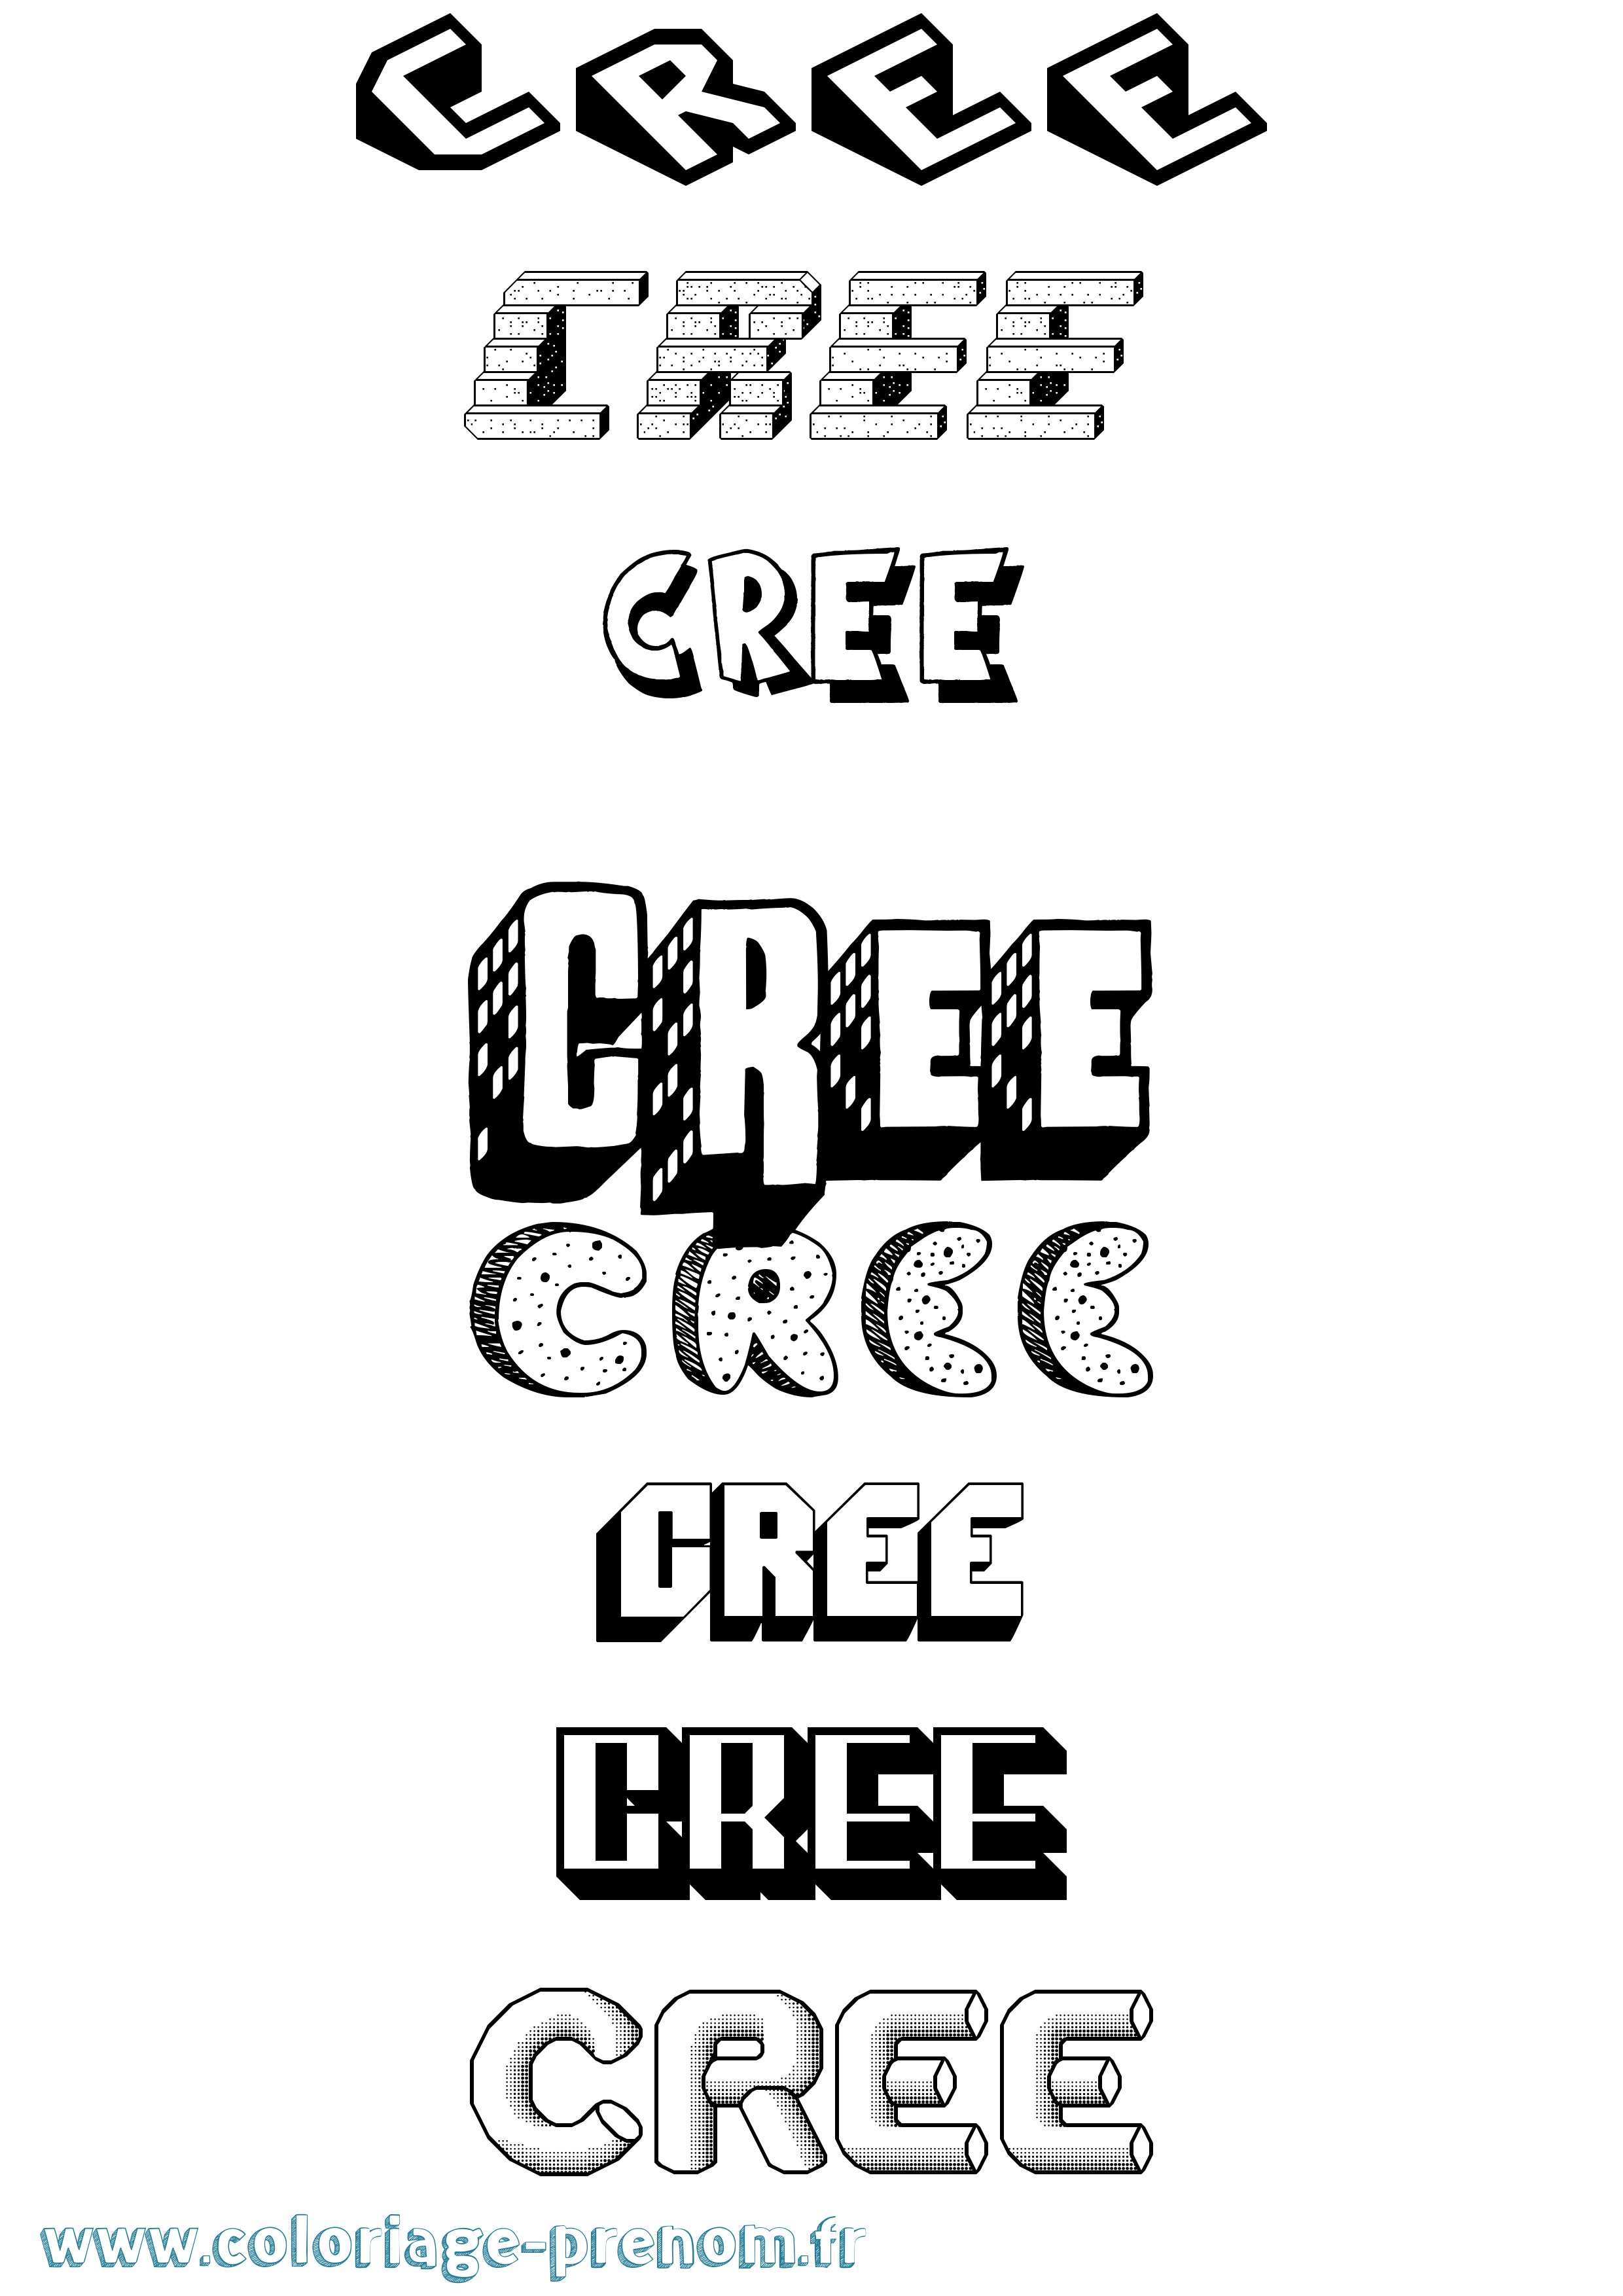 Coloriage prénom Cree Effet 3D